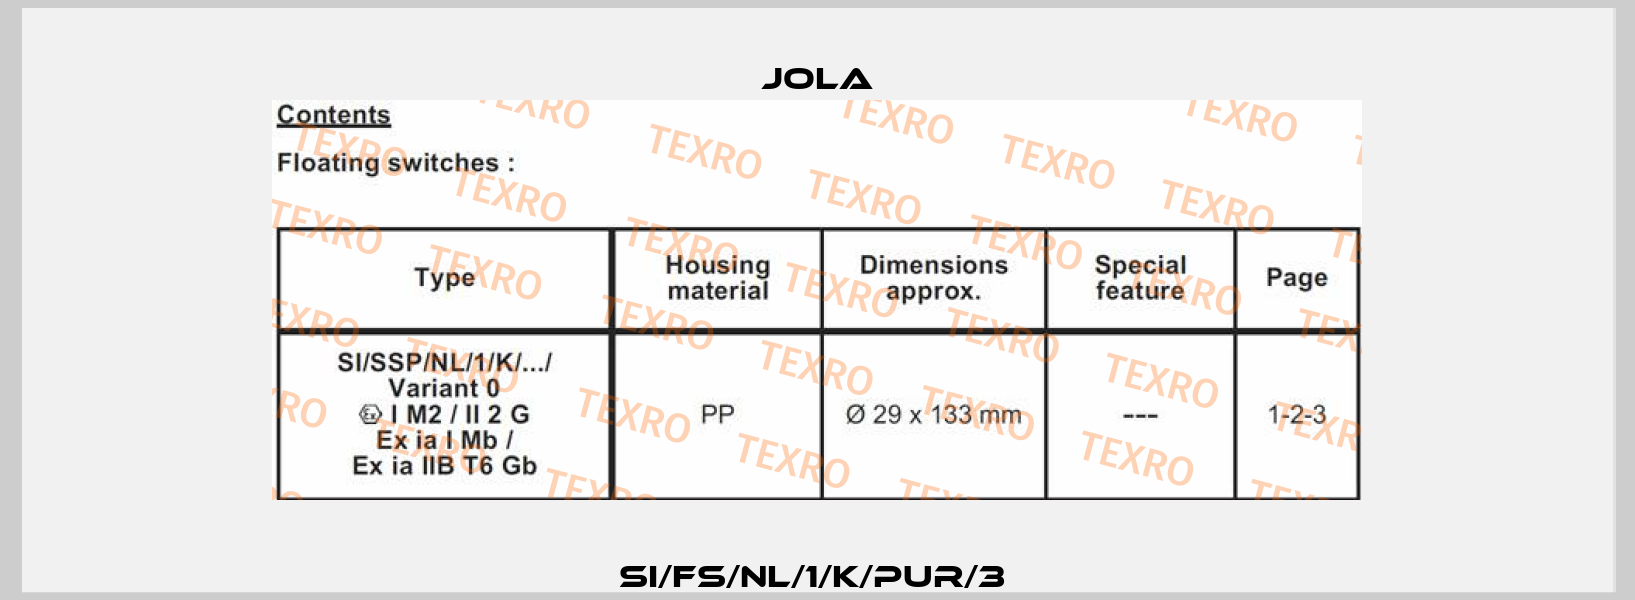 SI/FS/NL/1/K/PUR/3  Jola